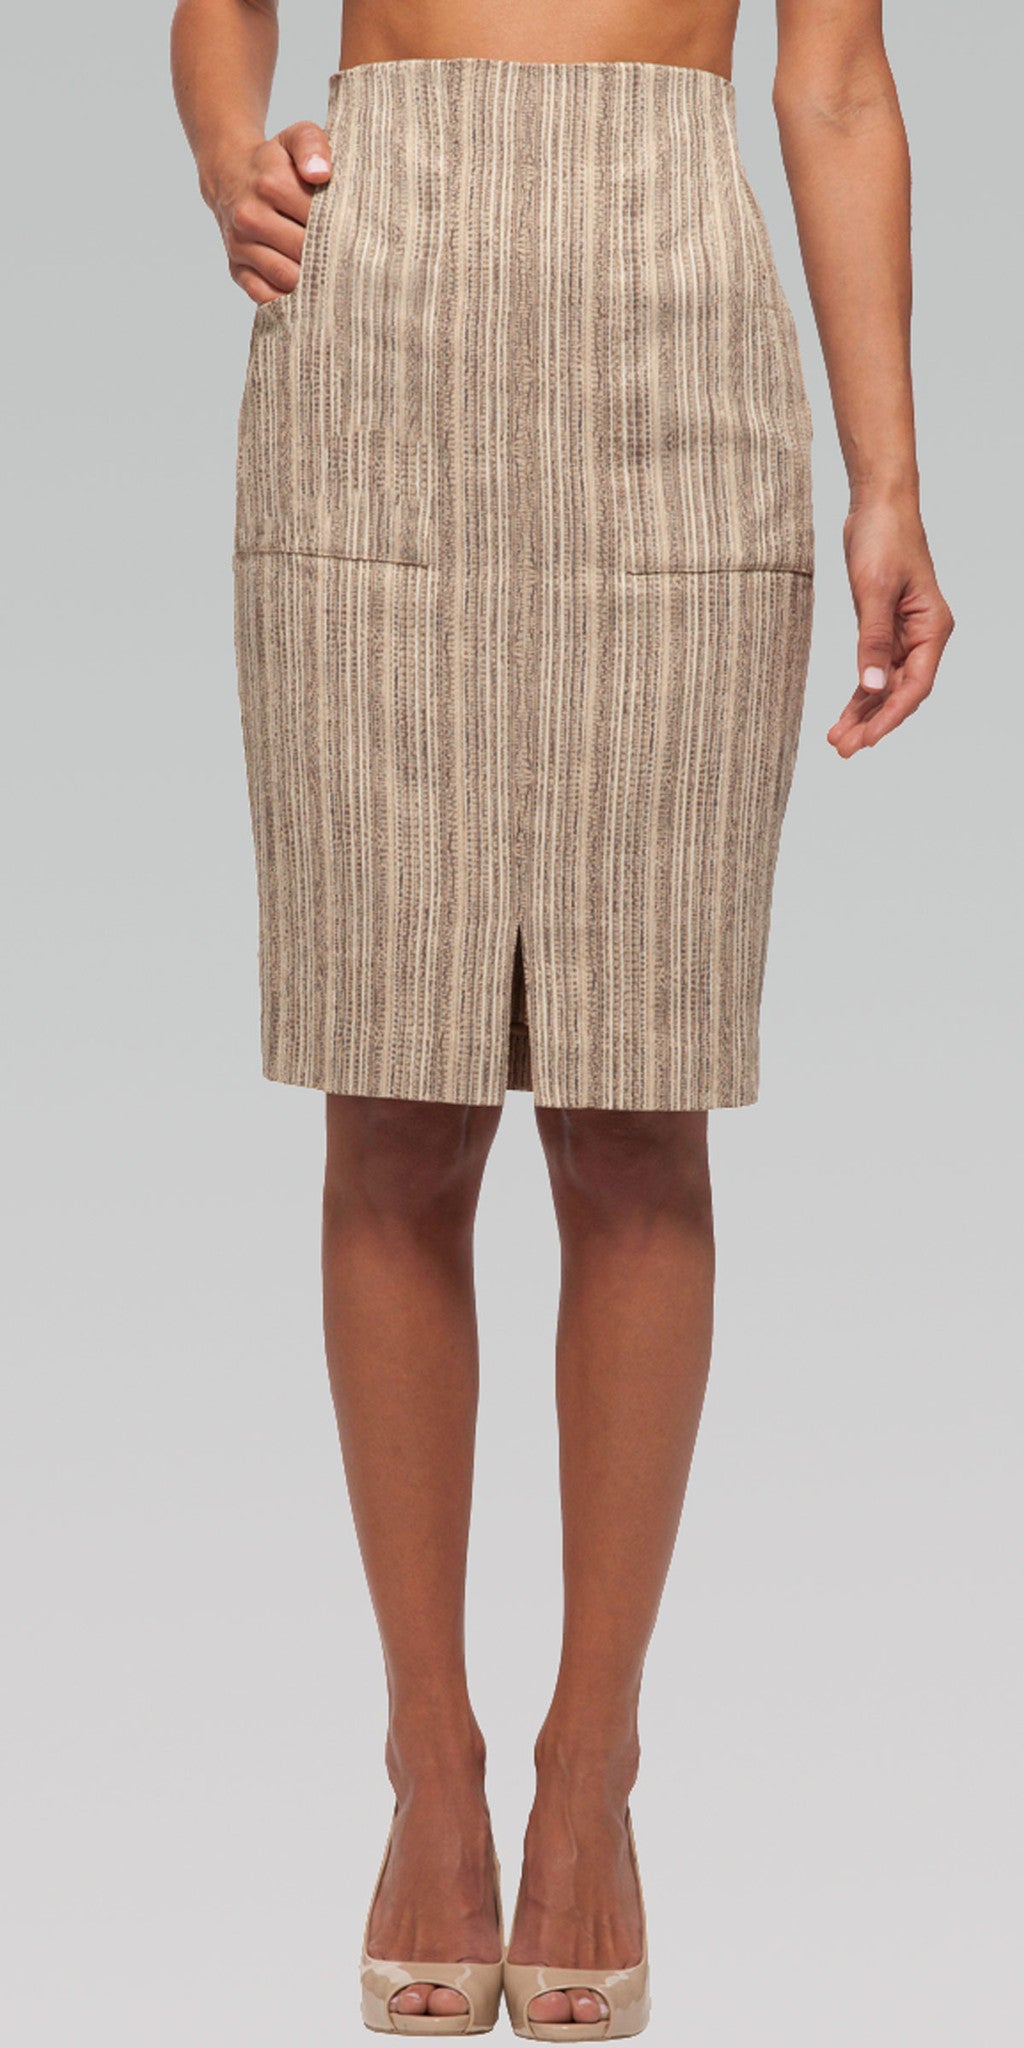 High Waisted Classic Skirt - Wood Grain